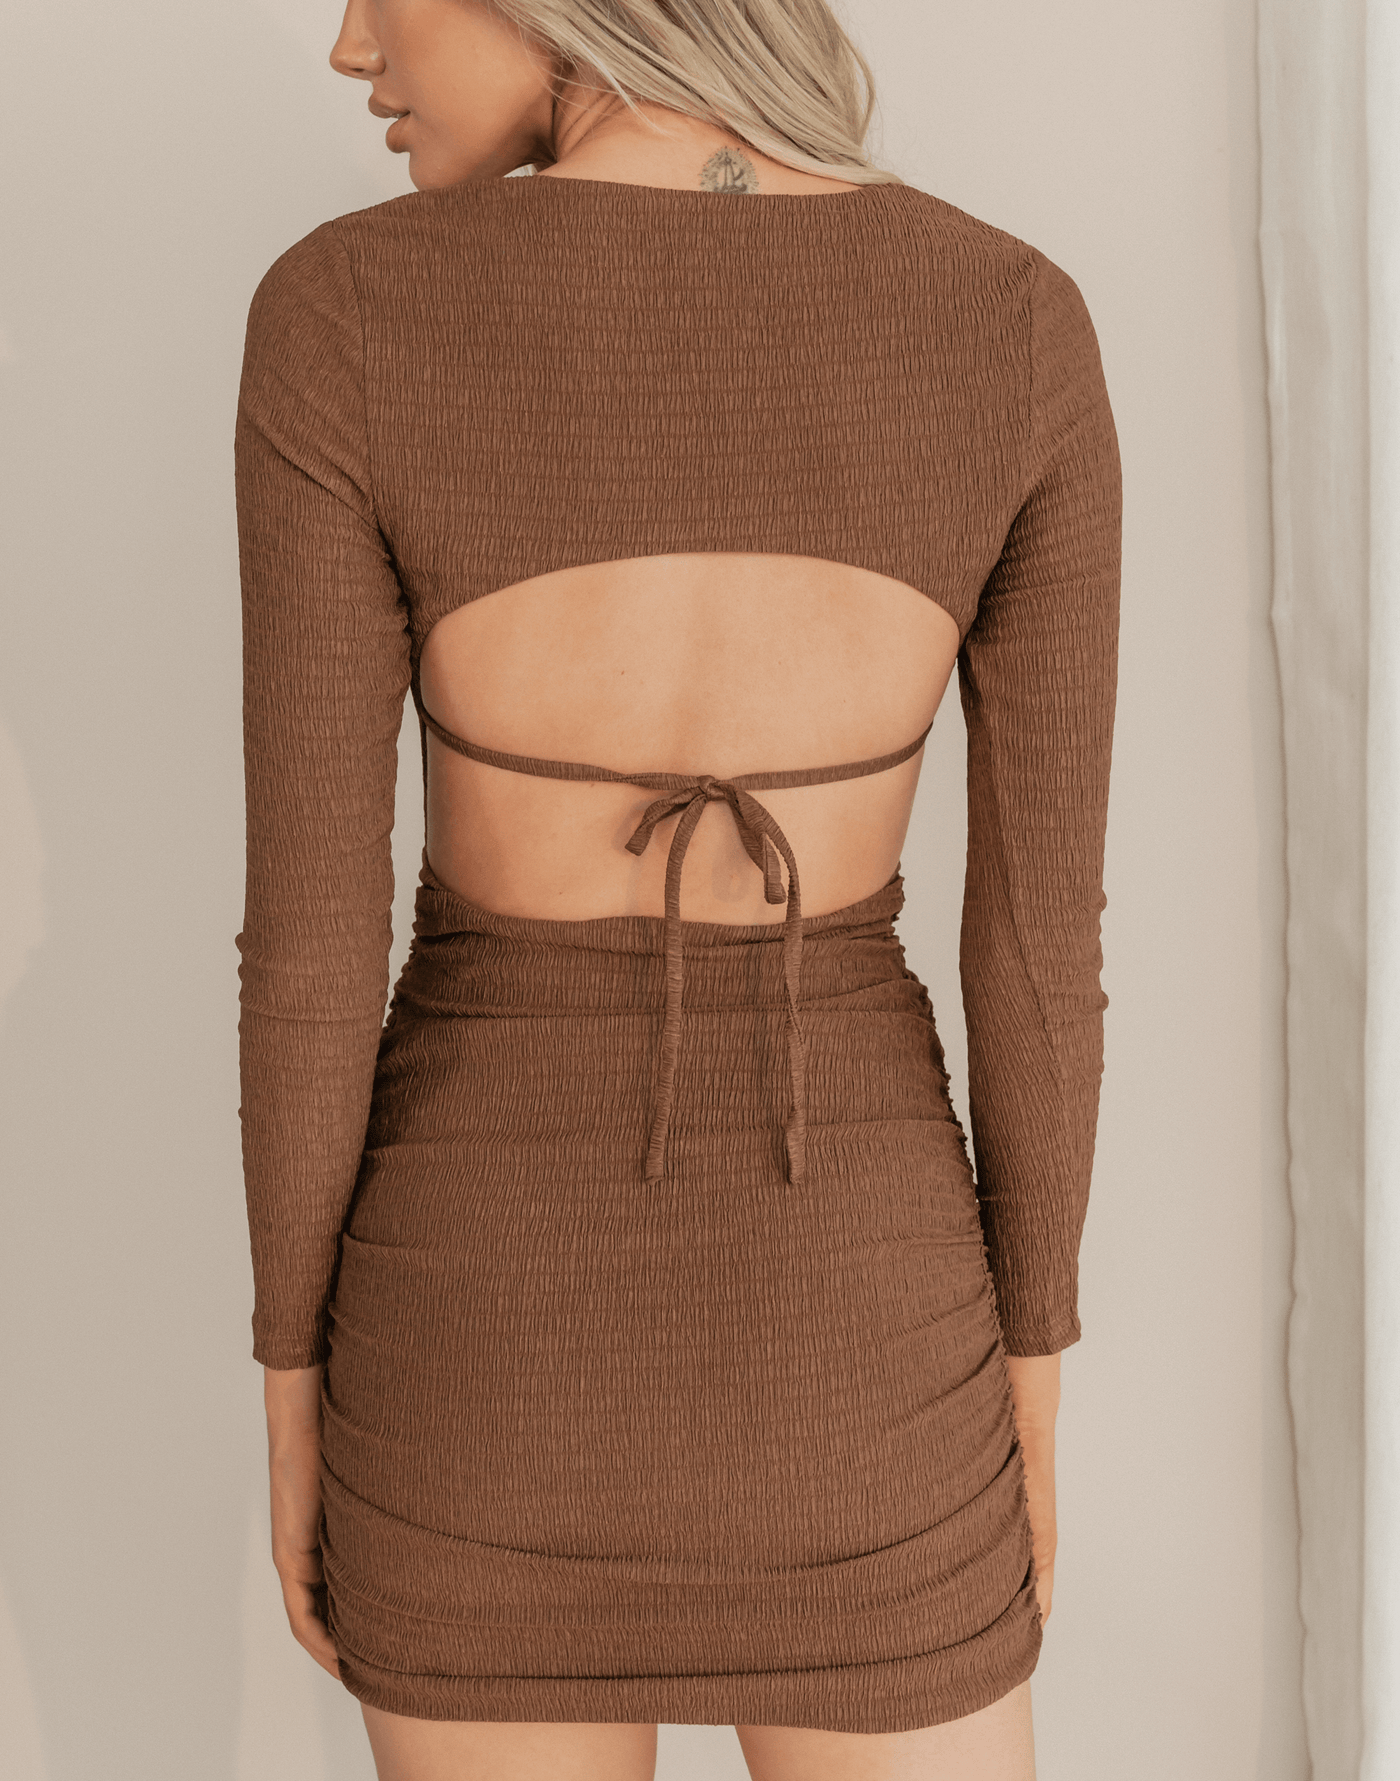 Drey Mini Dress (Brown) - Long Sleeve Mini Dress - Women's Dress - Charcoal Clothing